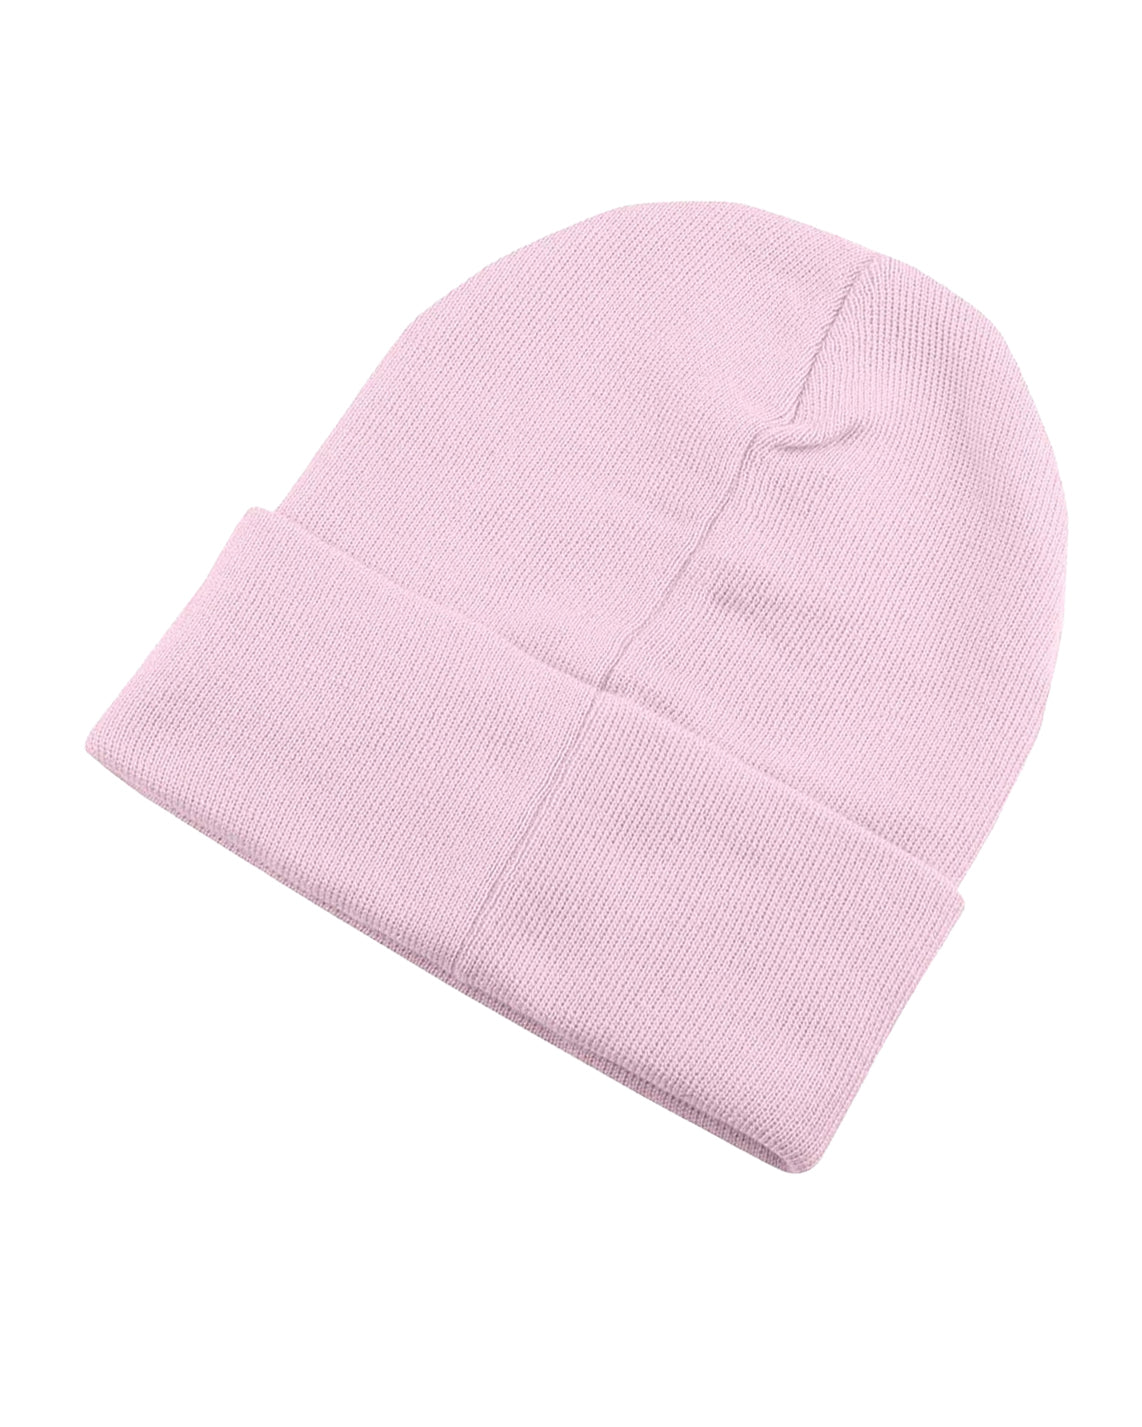 New Balance Knit Beanie Pink